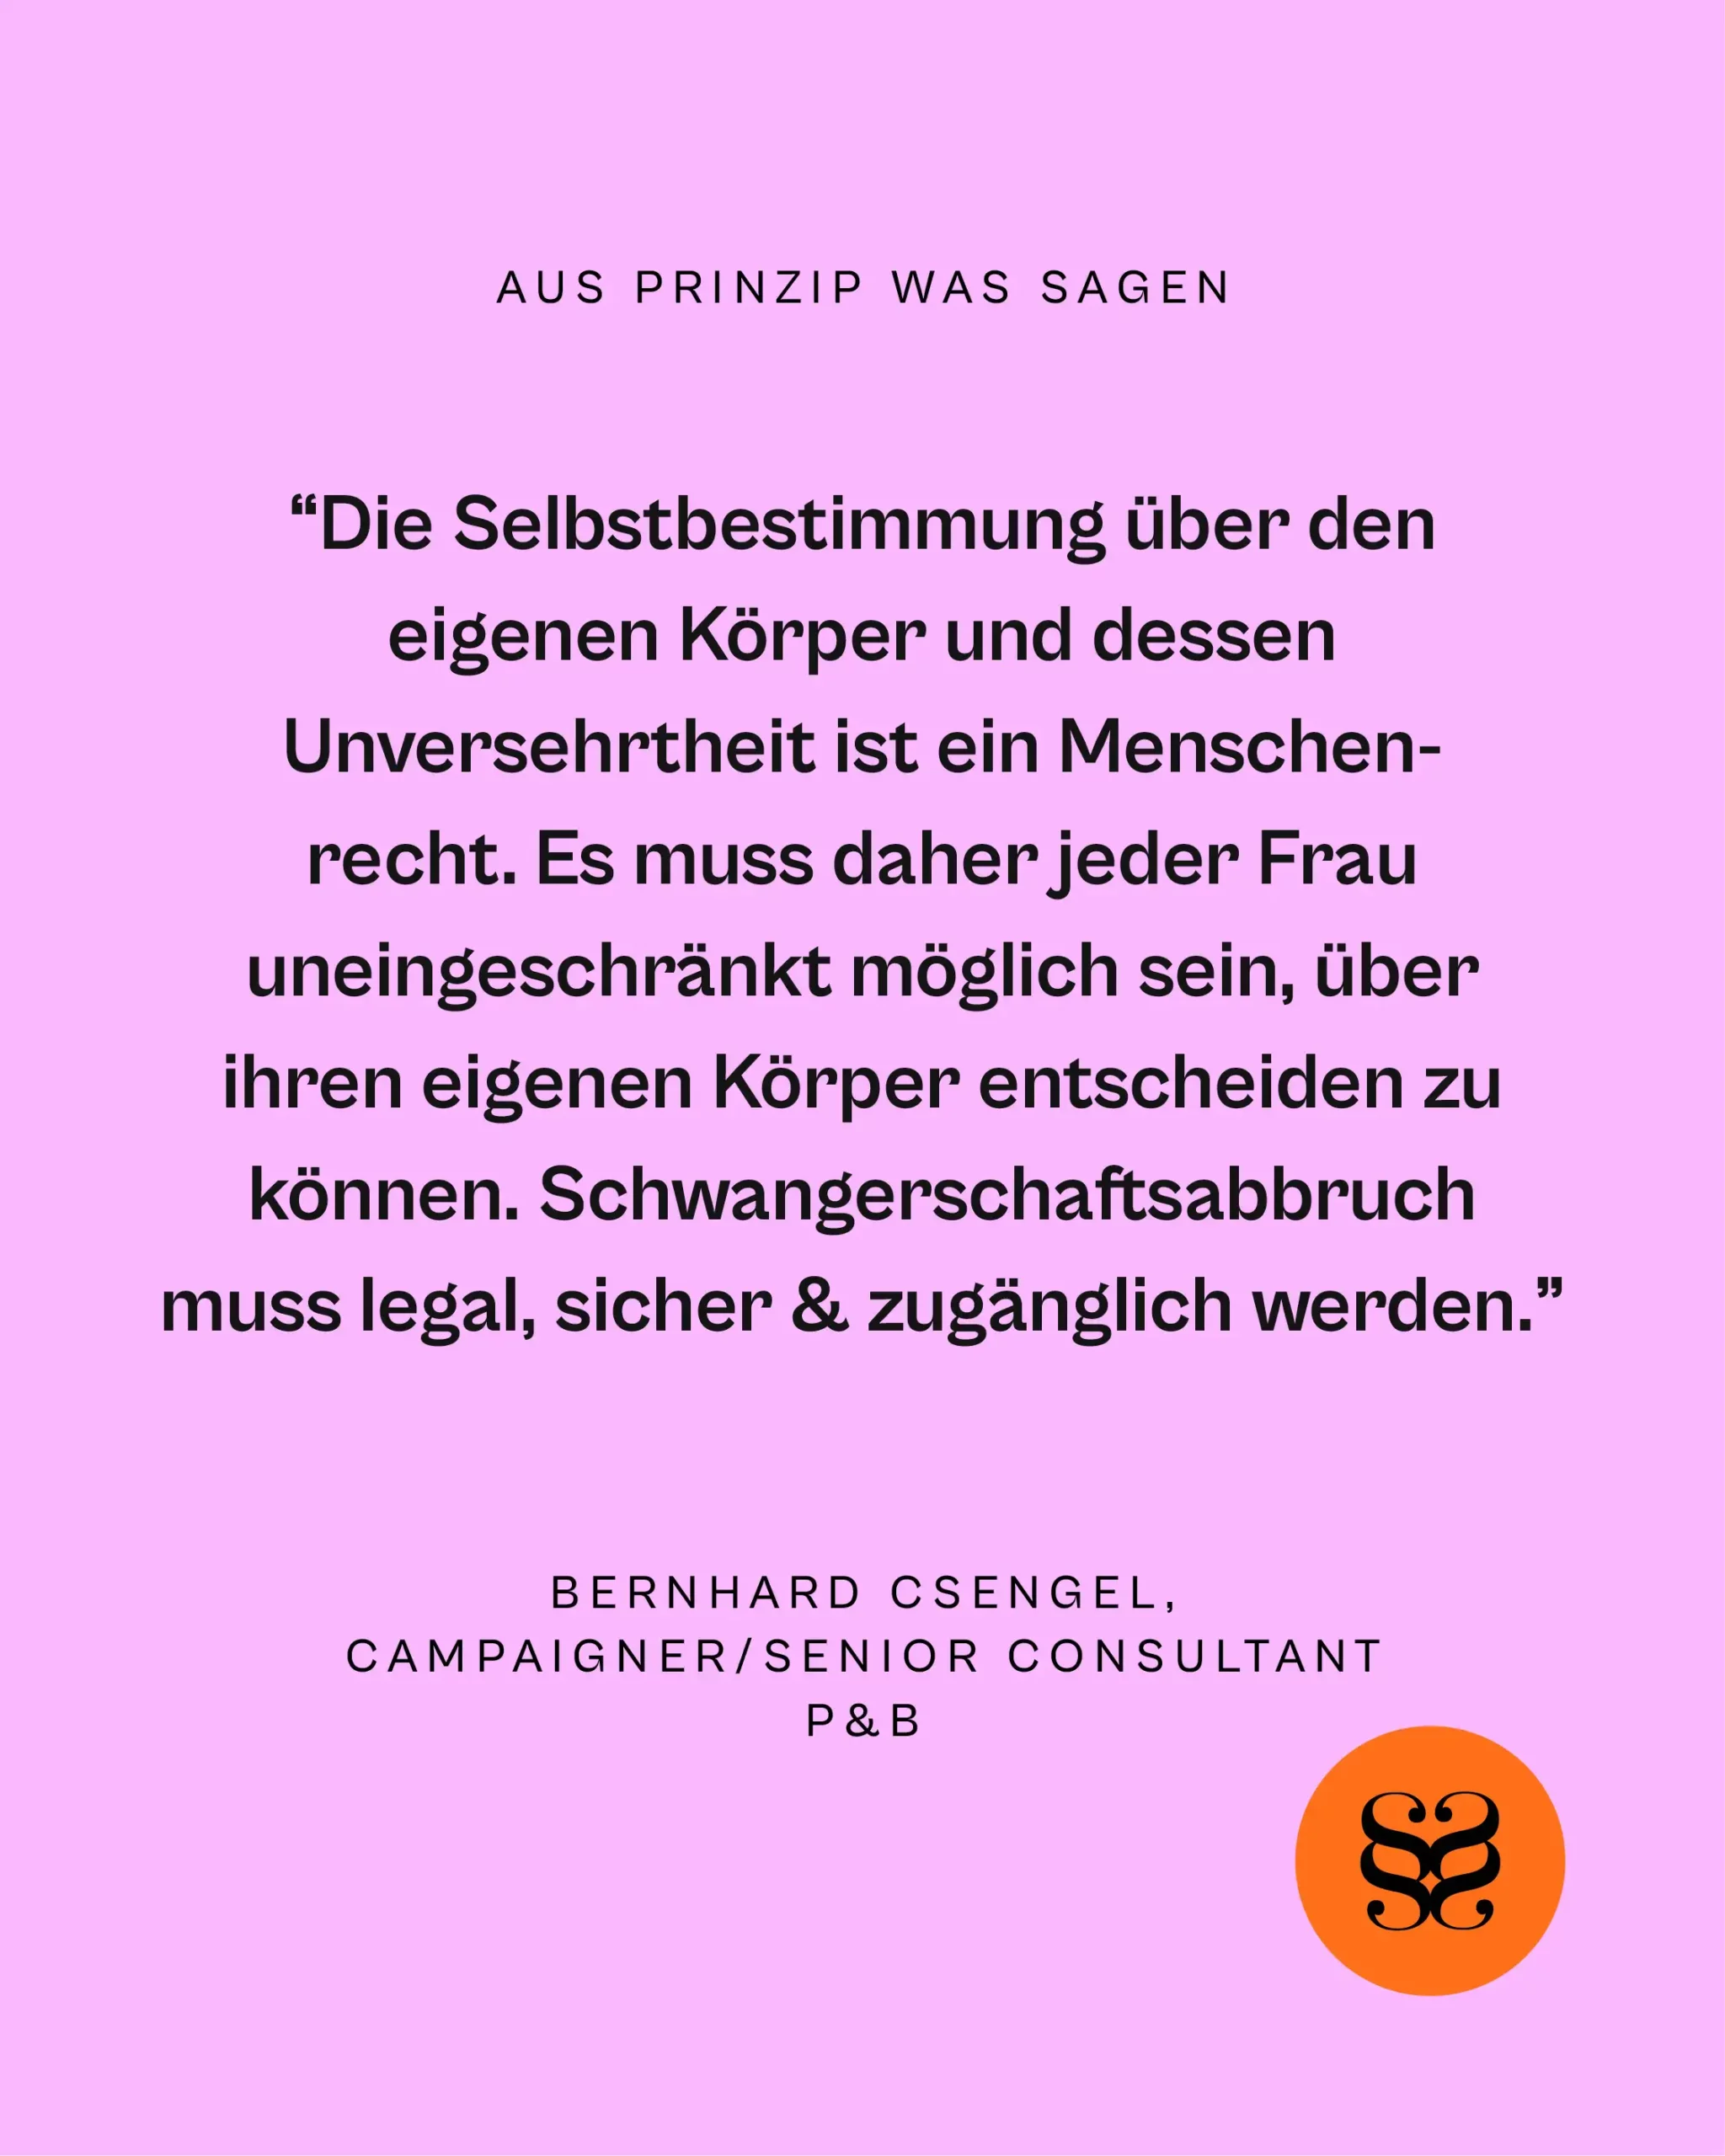 AP_Statement_Bernhard_Csengel2.jpg